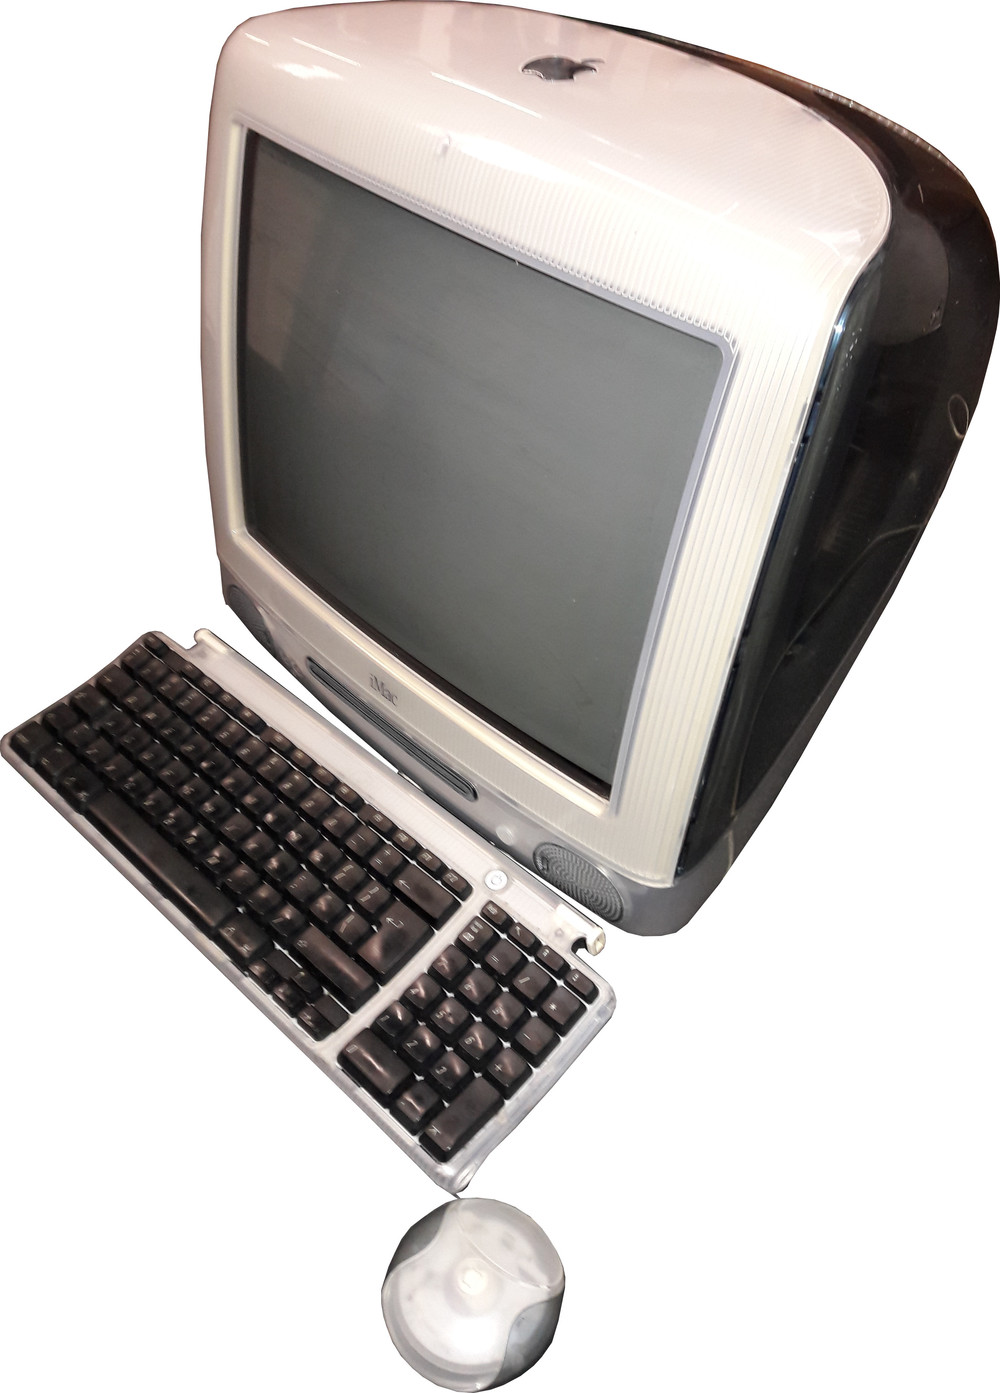 Apple iMac G3/DV (Slot Loading - Graphite) - Computer - Computing